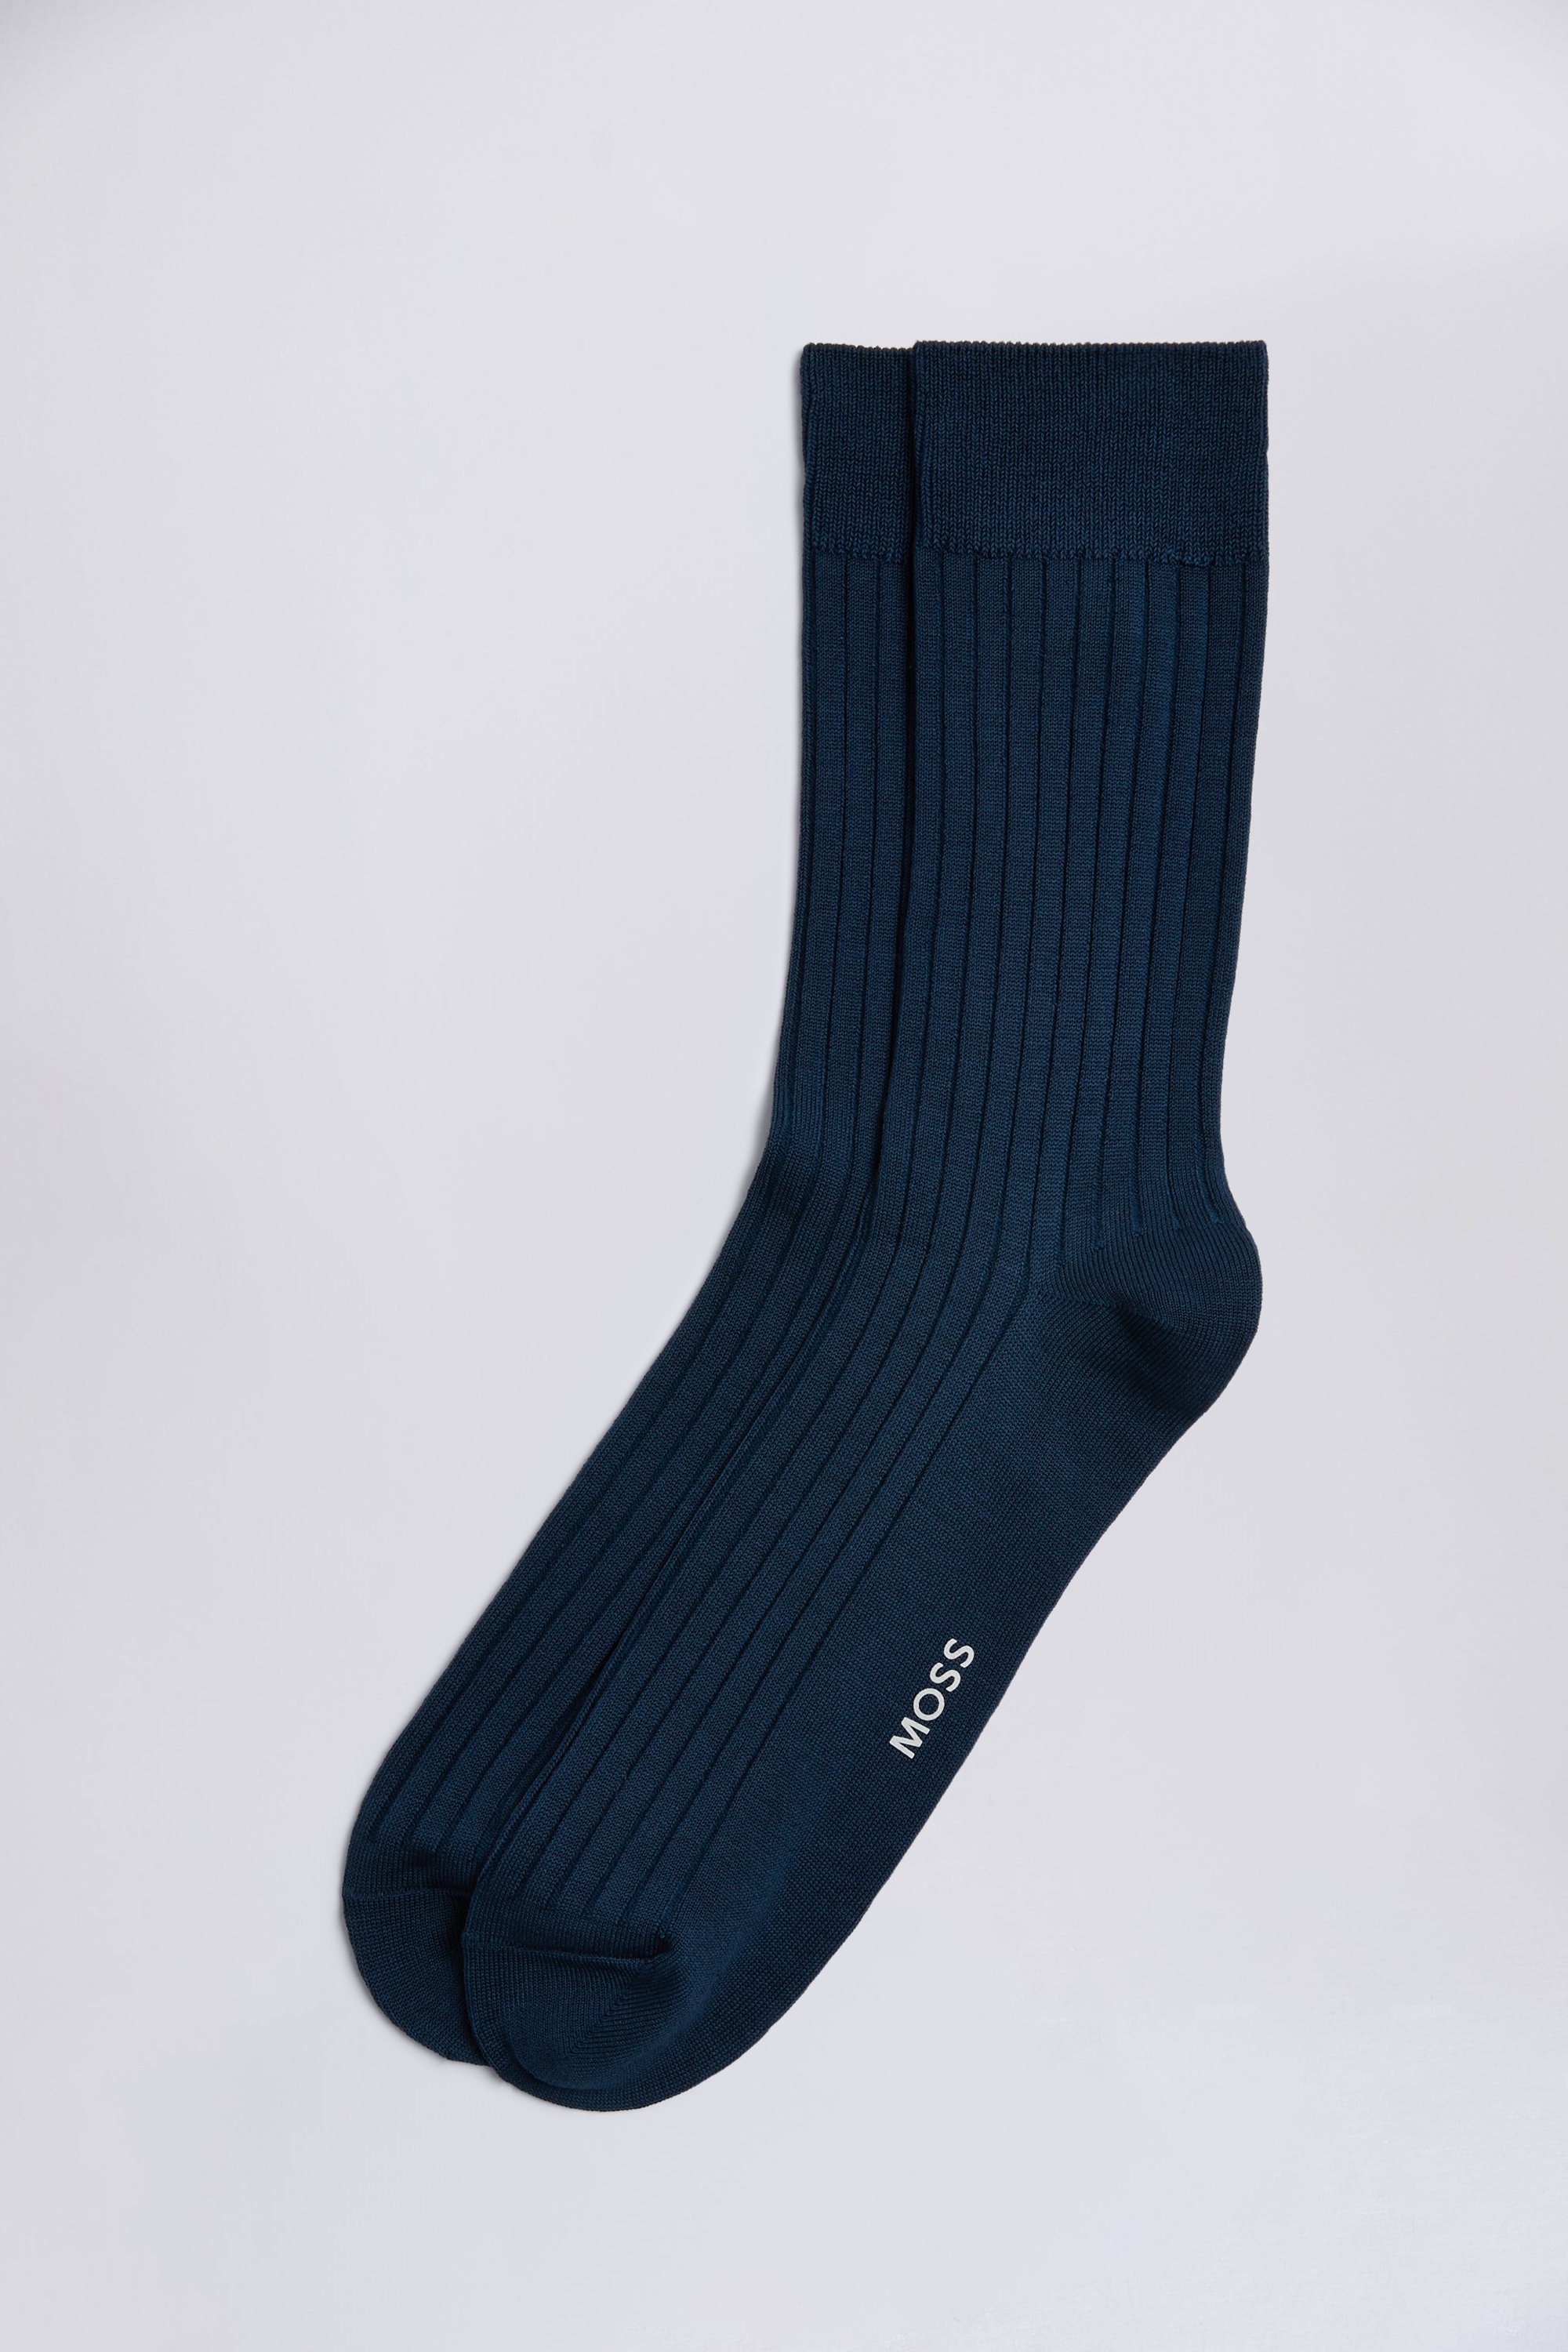 Indigo Fine Ribbed Socks | Buy Online at Moss